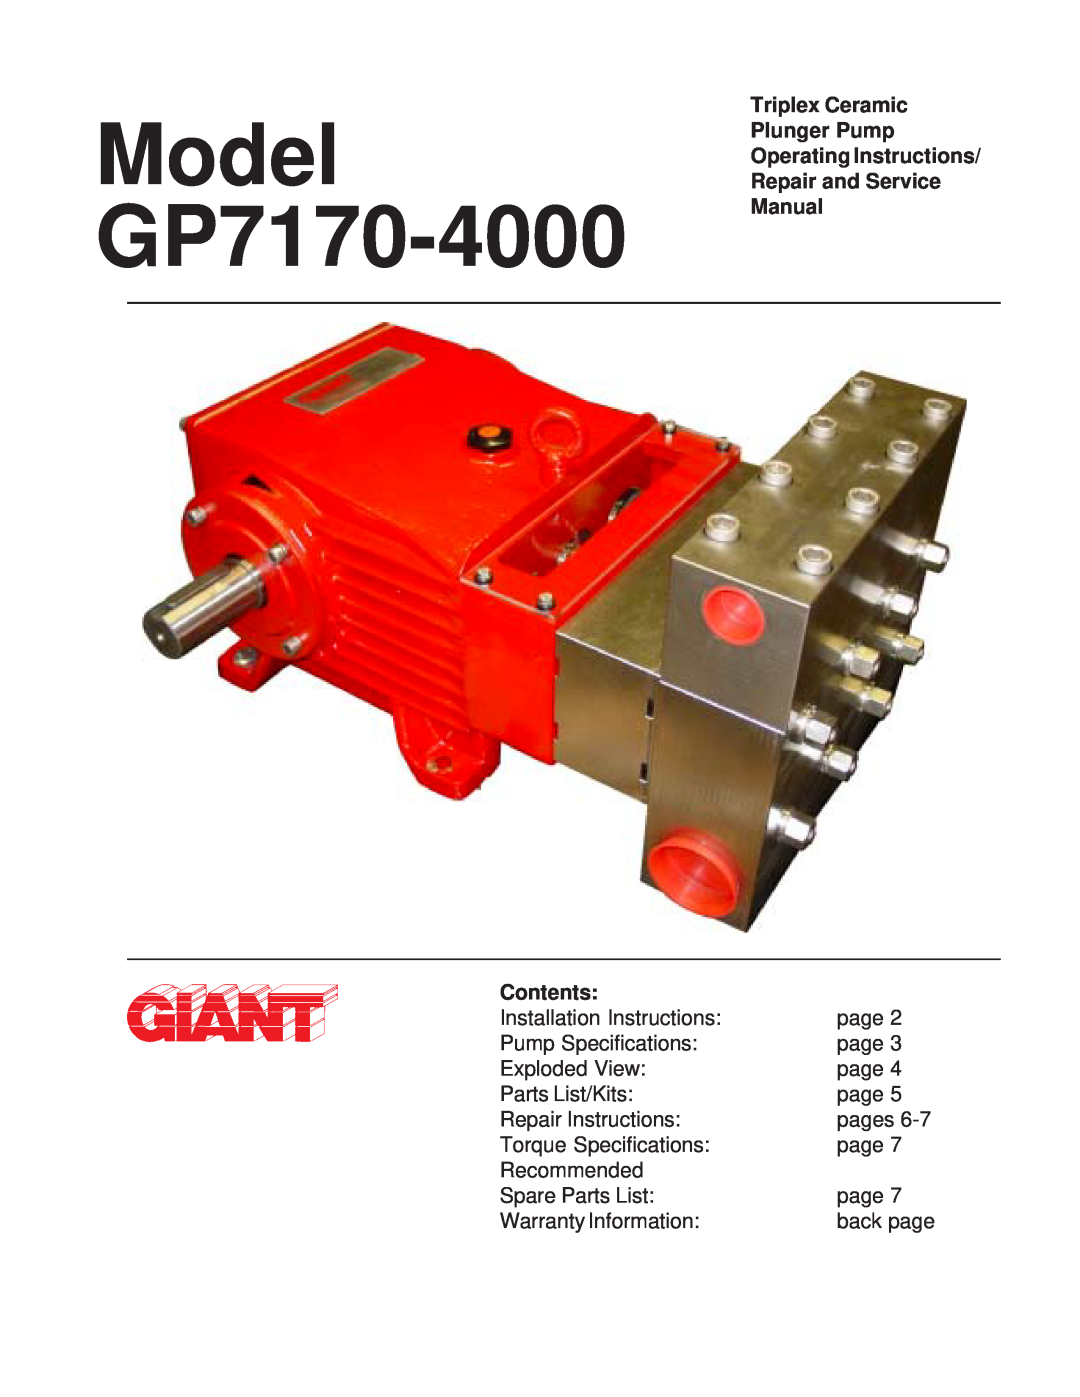 Giant installation instructions Model GP7170-4000, Triplex Ceramic Plunger Pump, Contents 